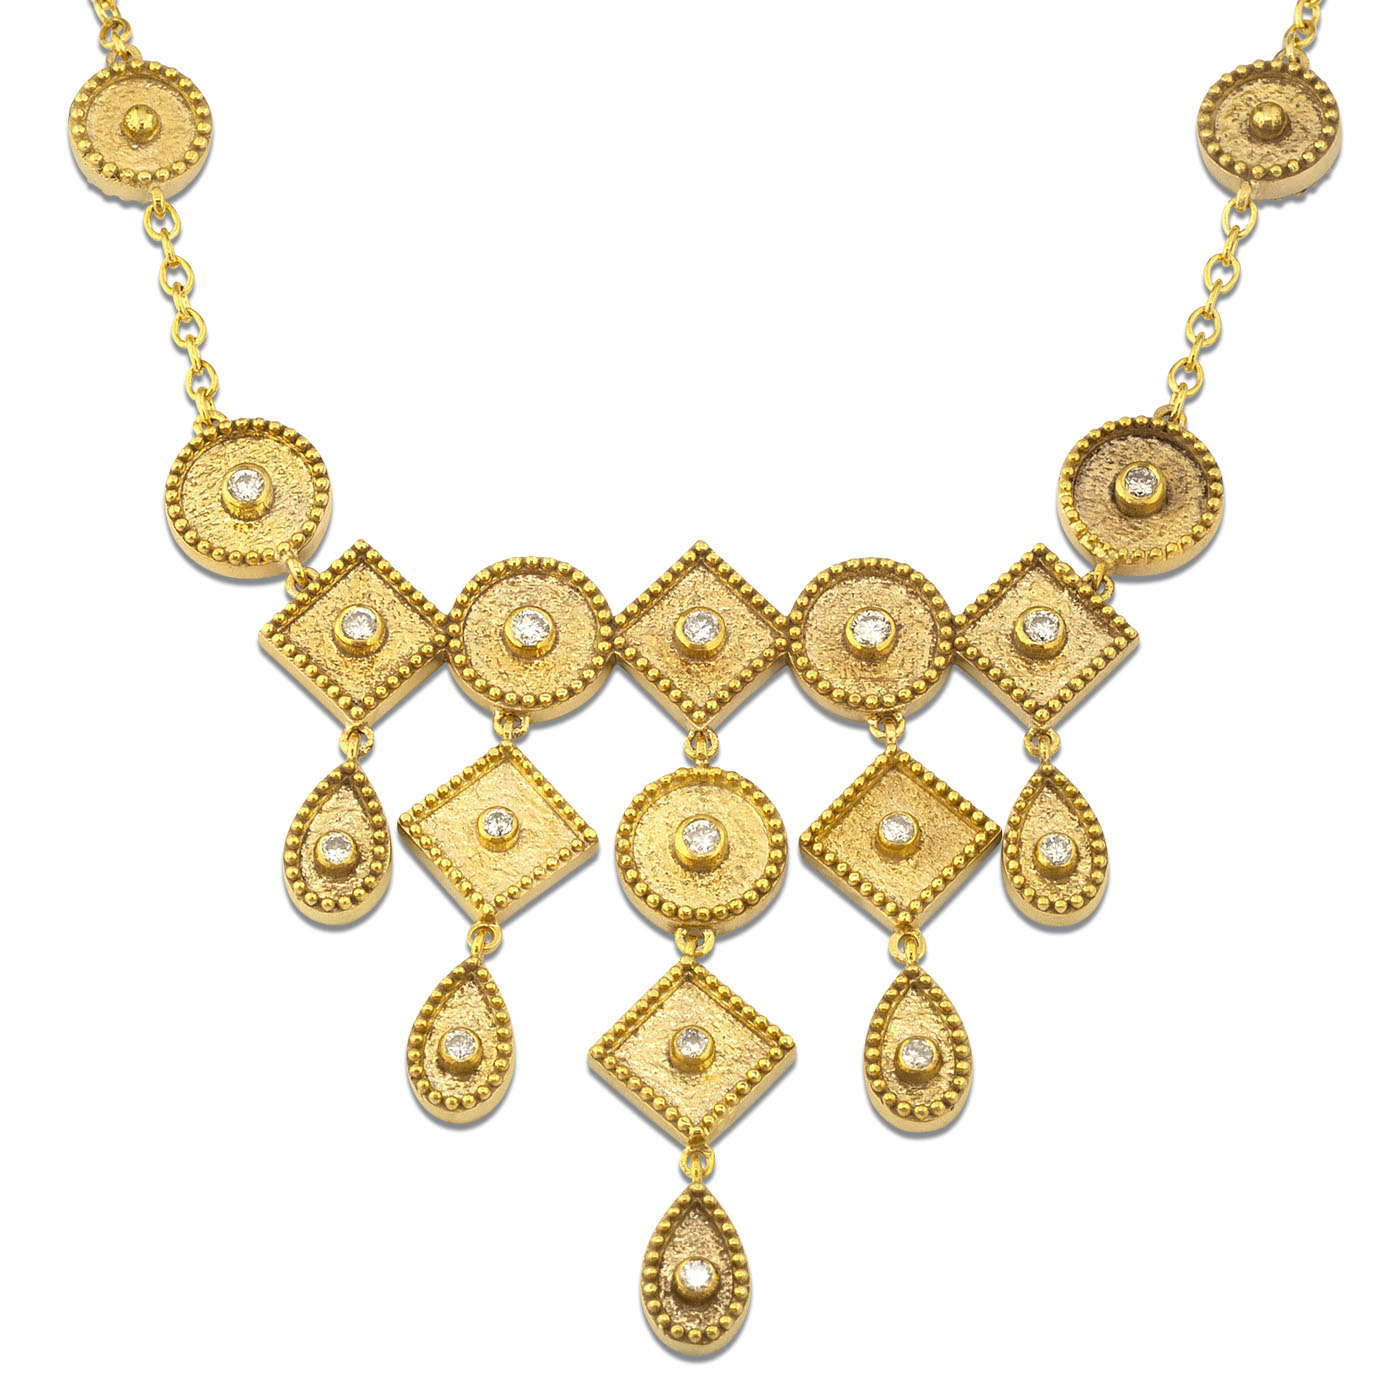 Gold geometric necklace with diamonds